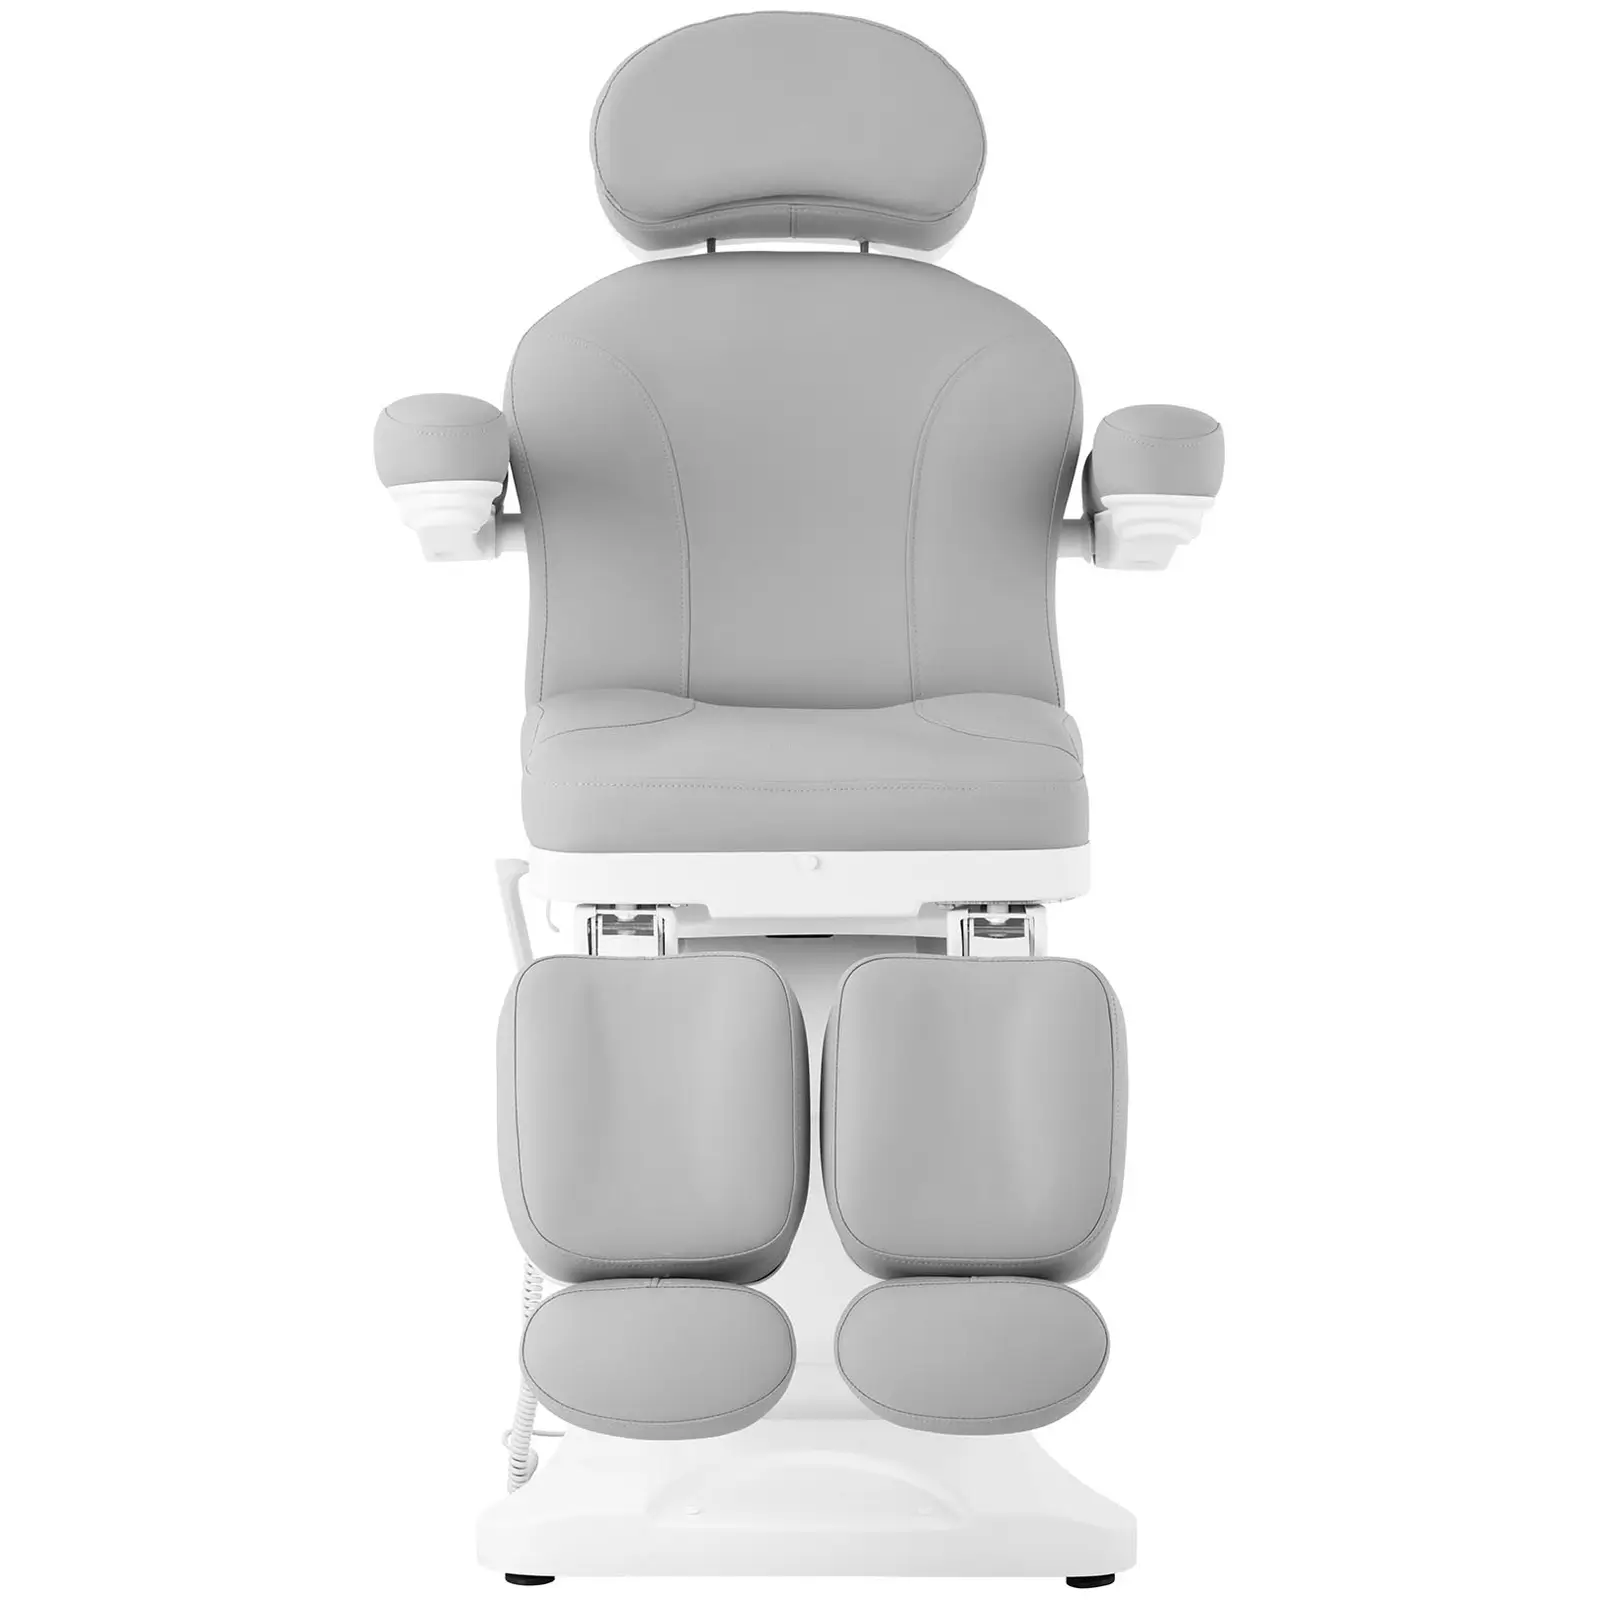 Cadeira de estética - 350 W - 150 kg - Cinza, Branco